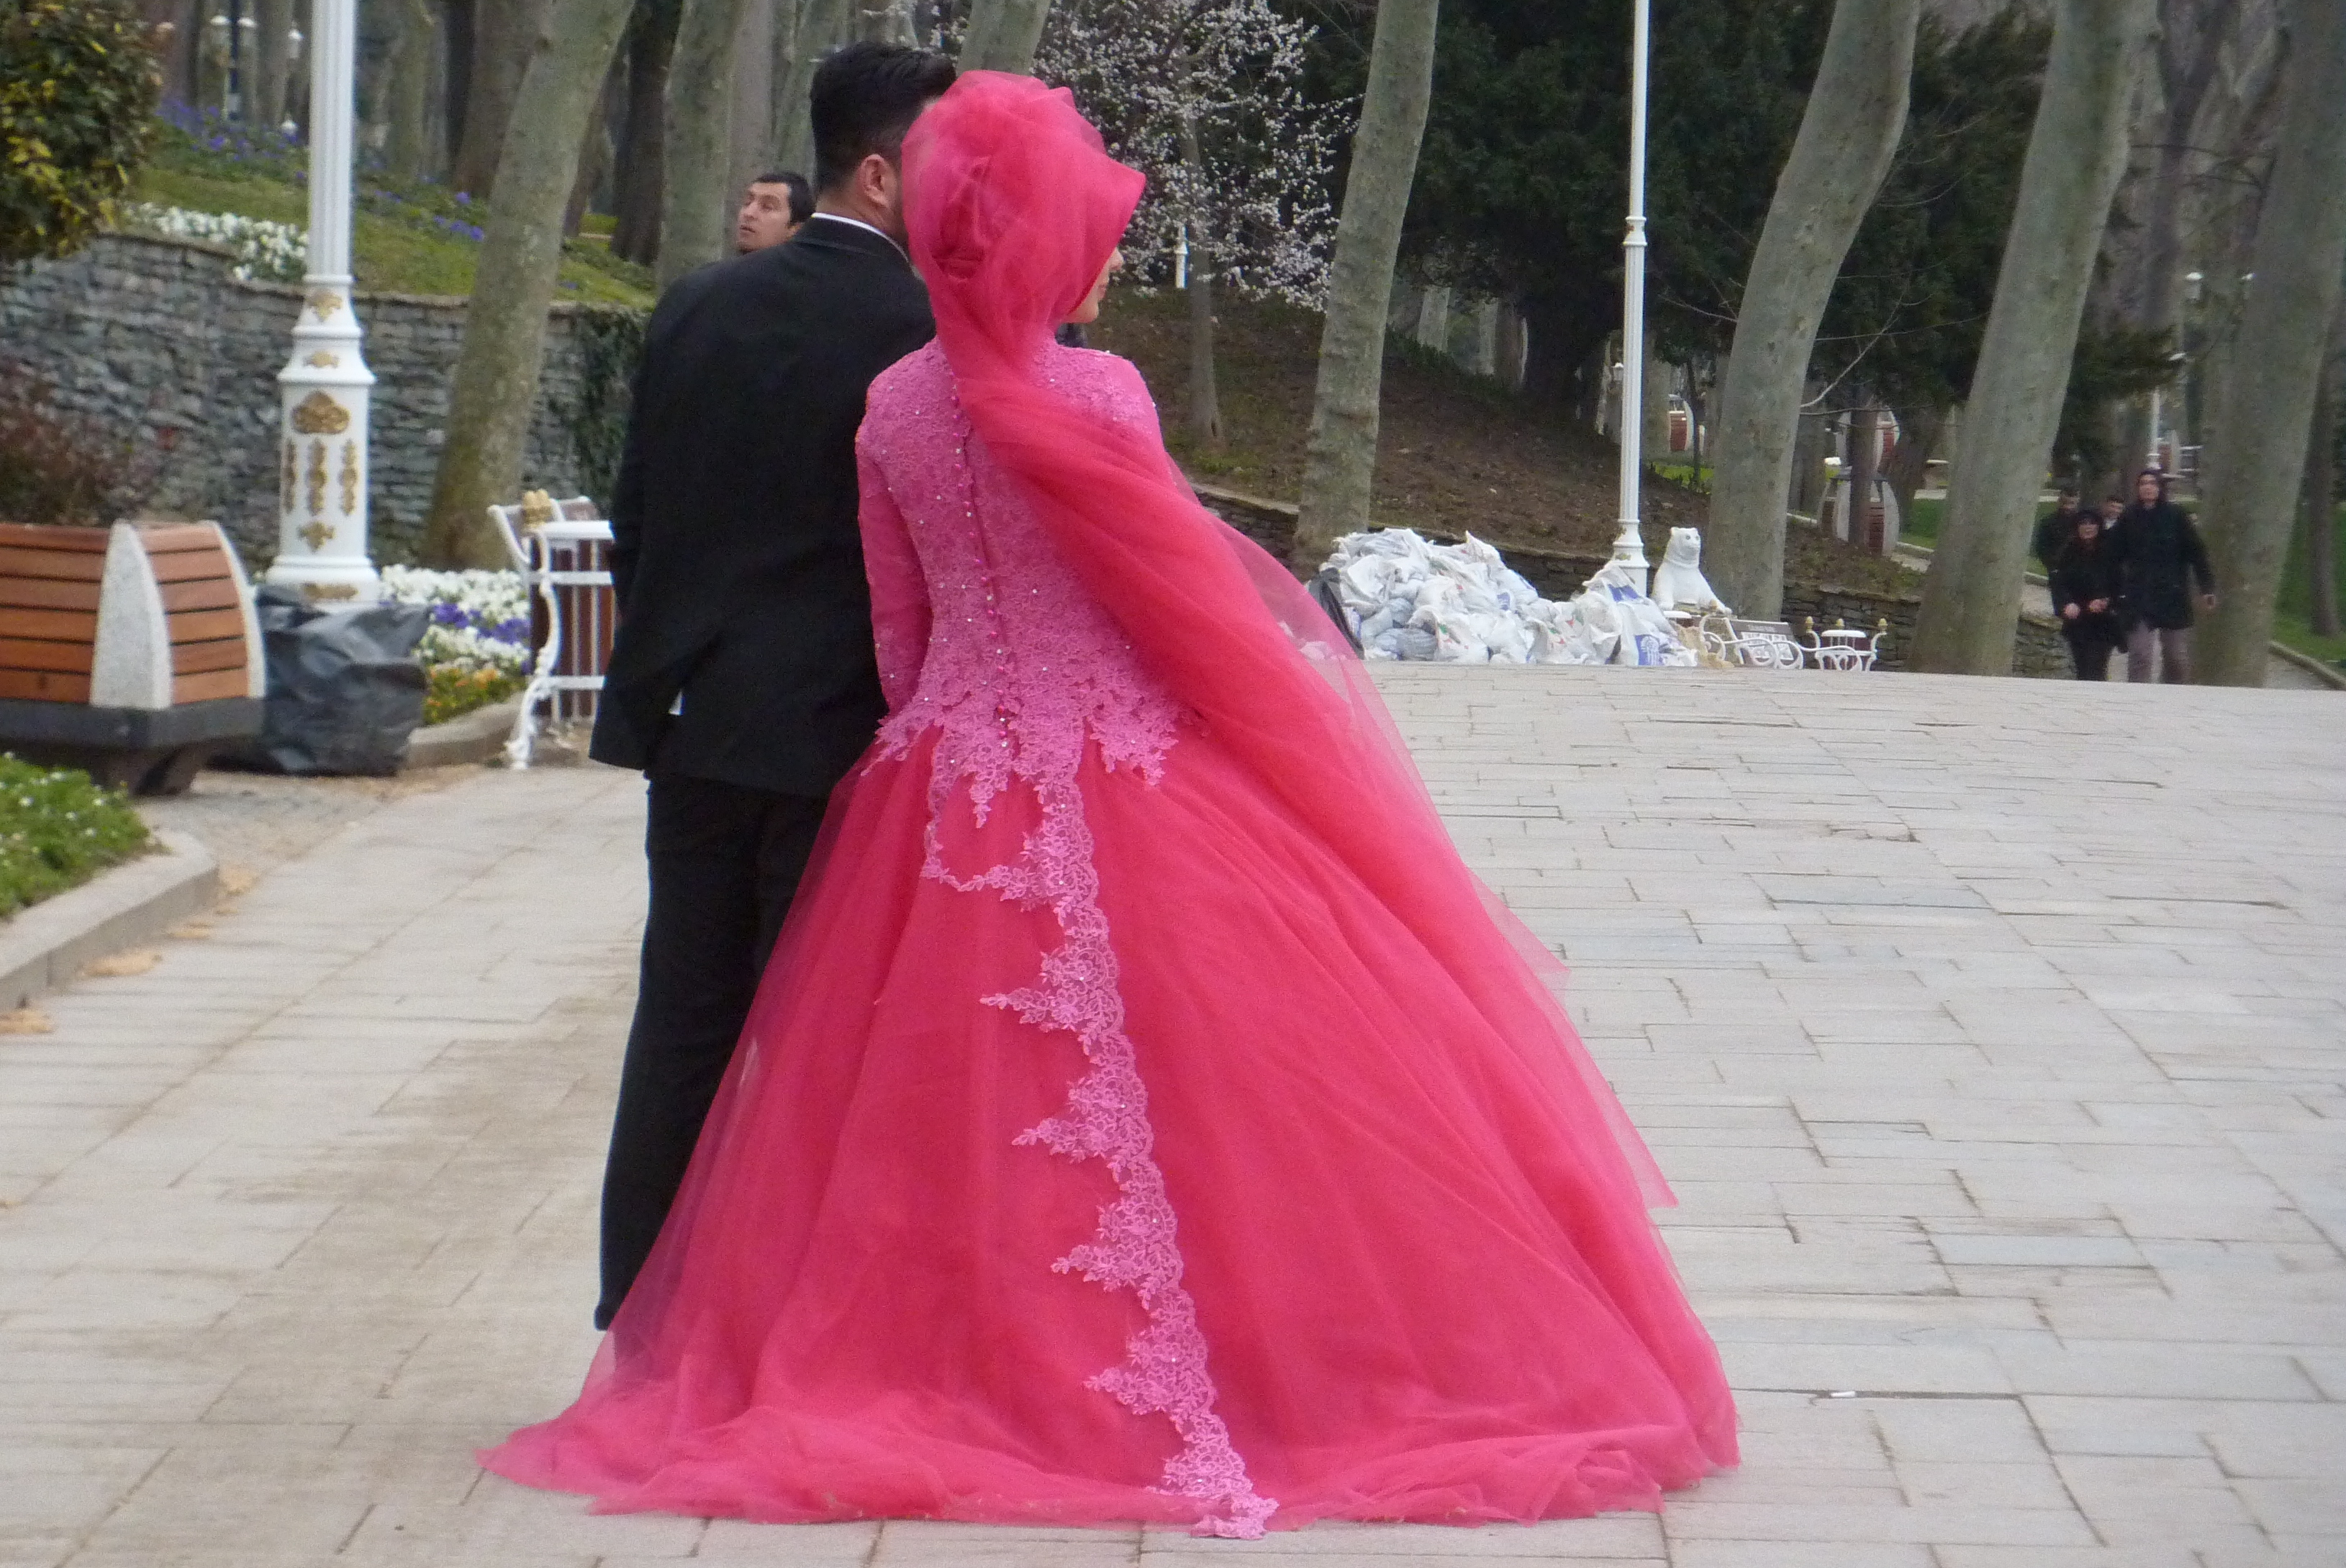 pink and white wedding dress